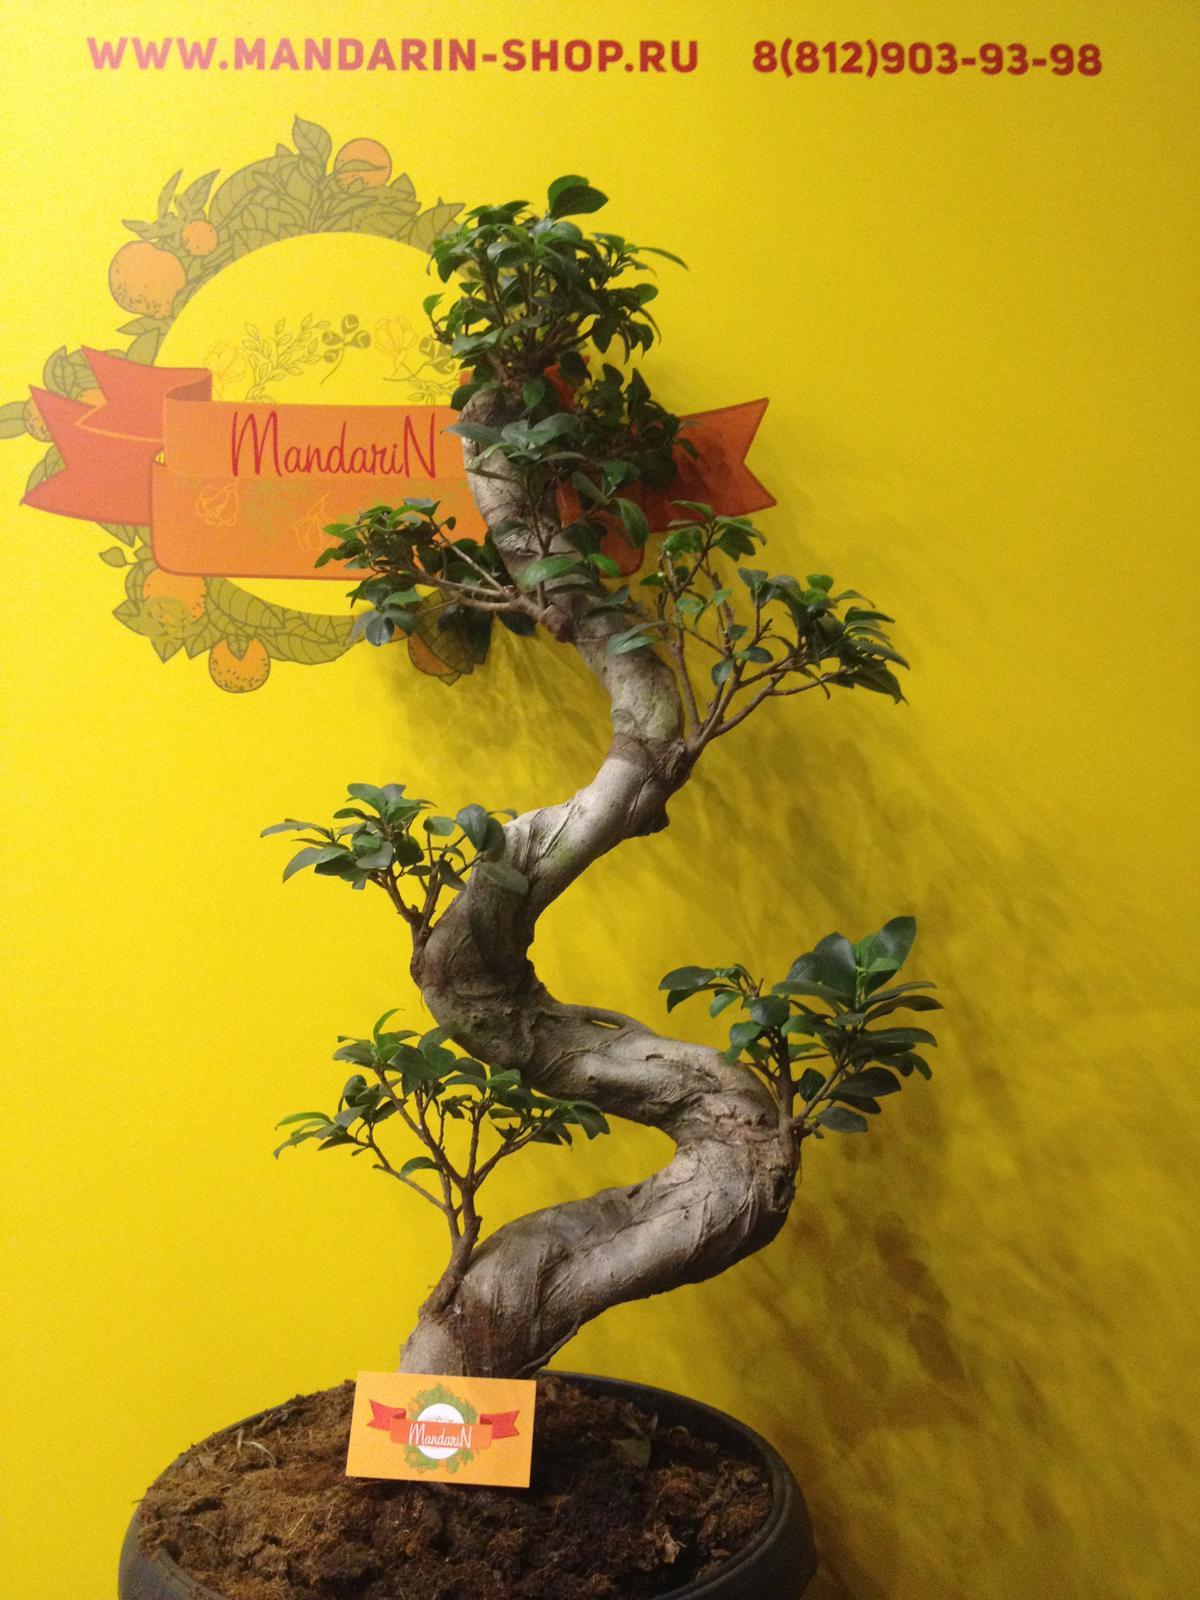 Bonsai Ficus microcarpa в магазине Мандарин фото